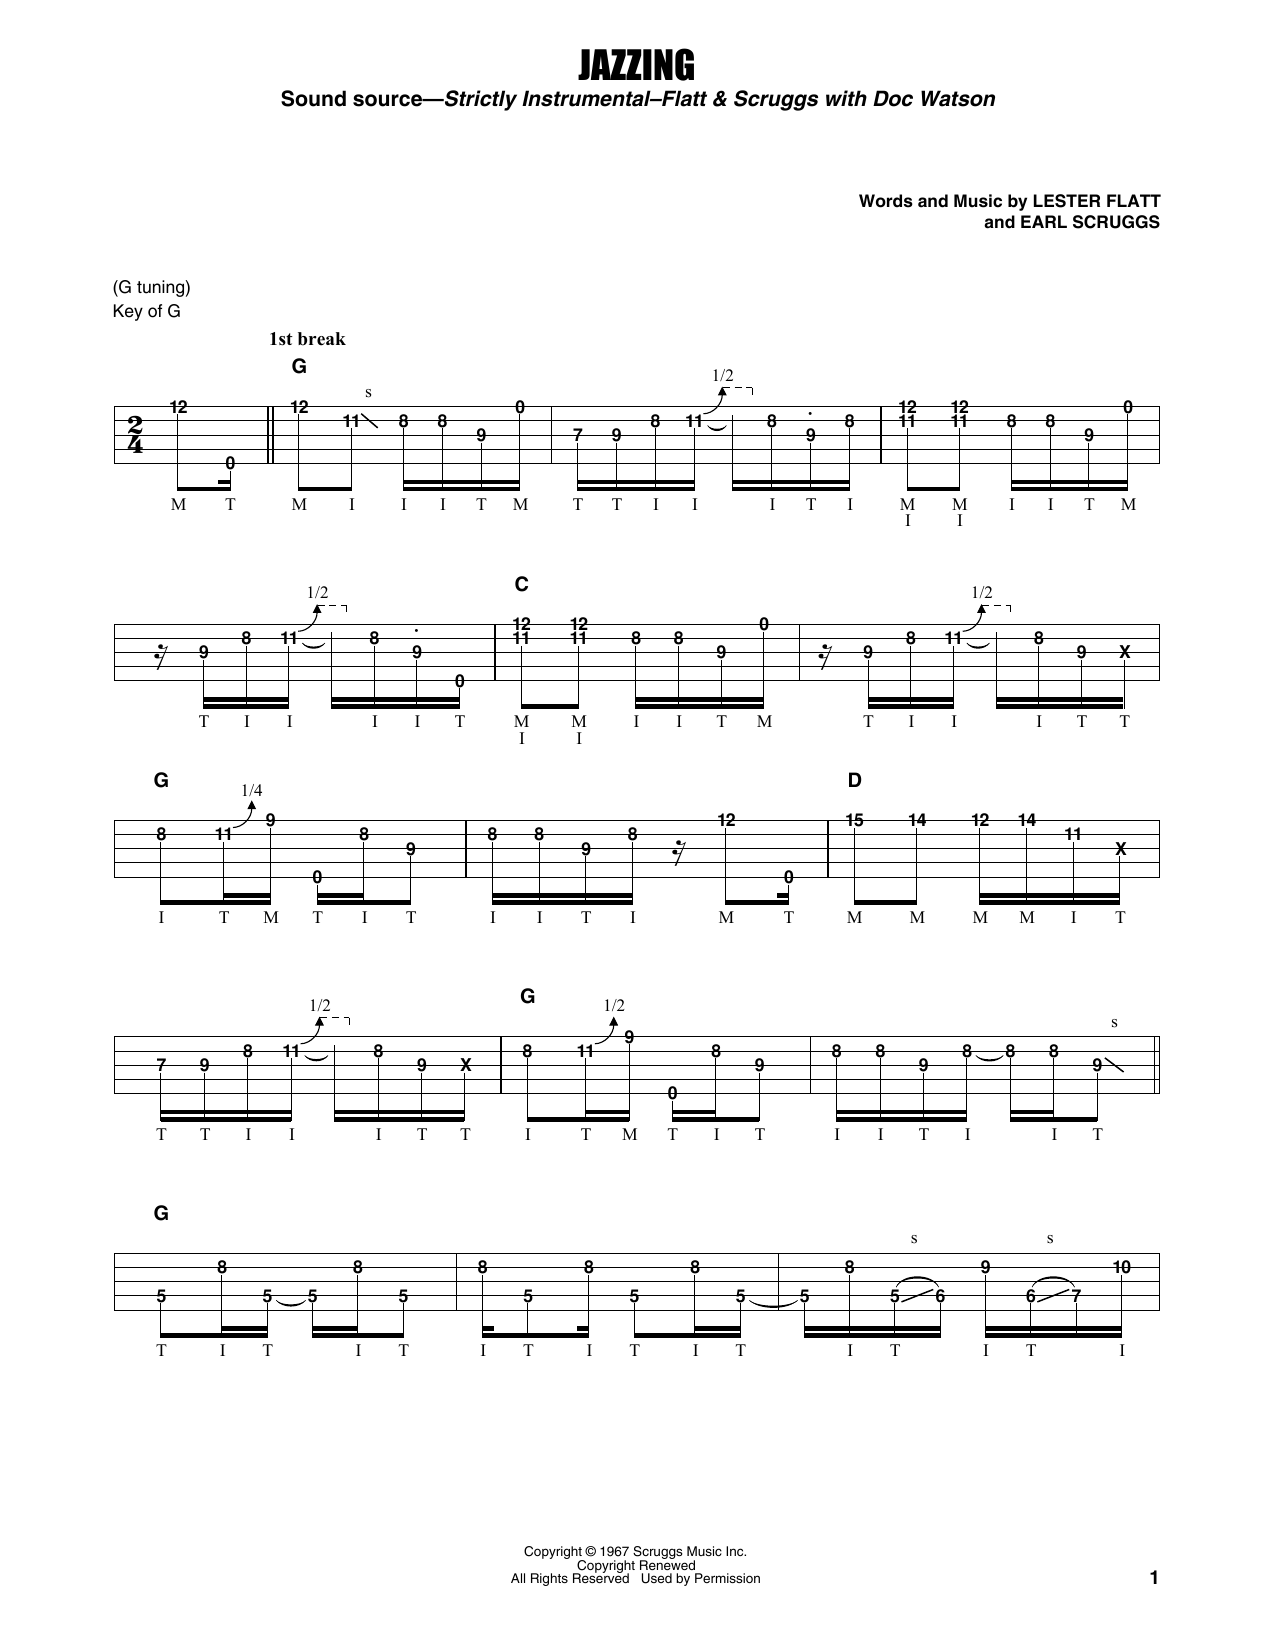 Flatt & Scruggs Jazzing Sheet Music Notes & Chords for Banjo Tab - Download or Print PDF